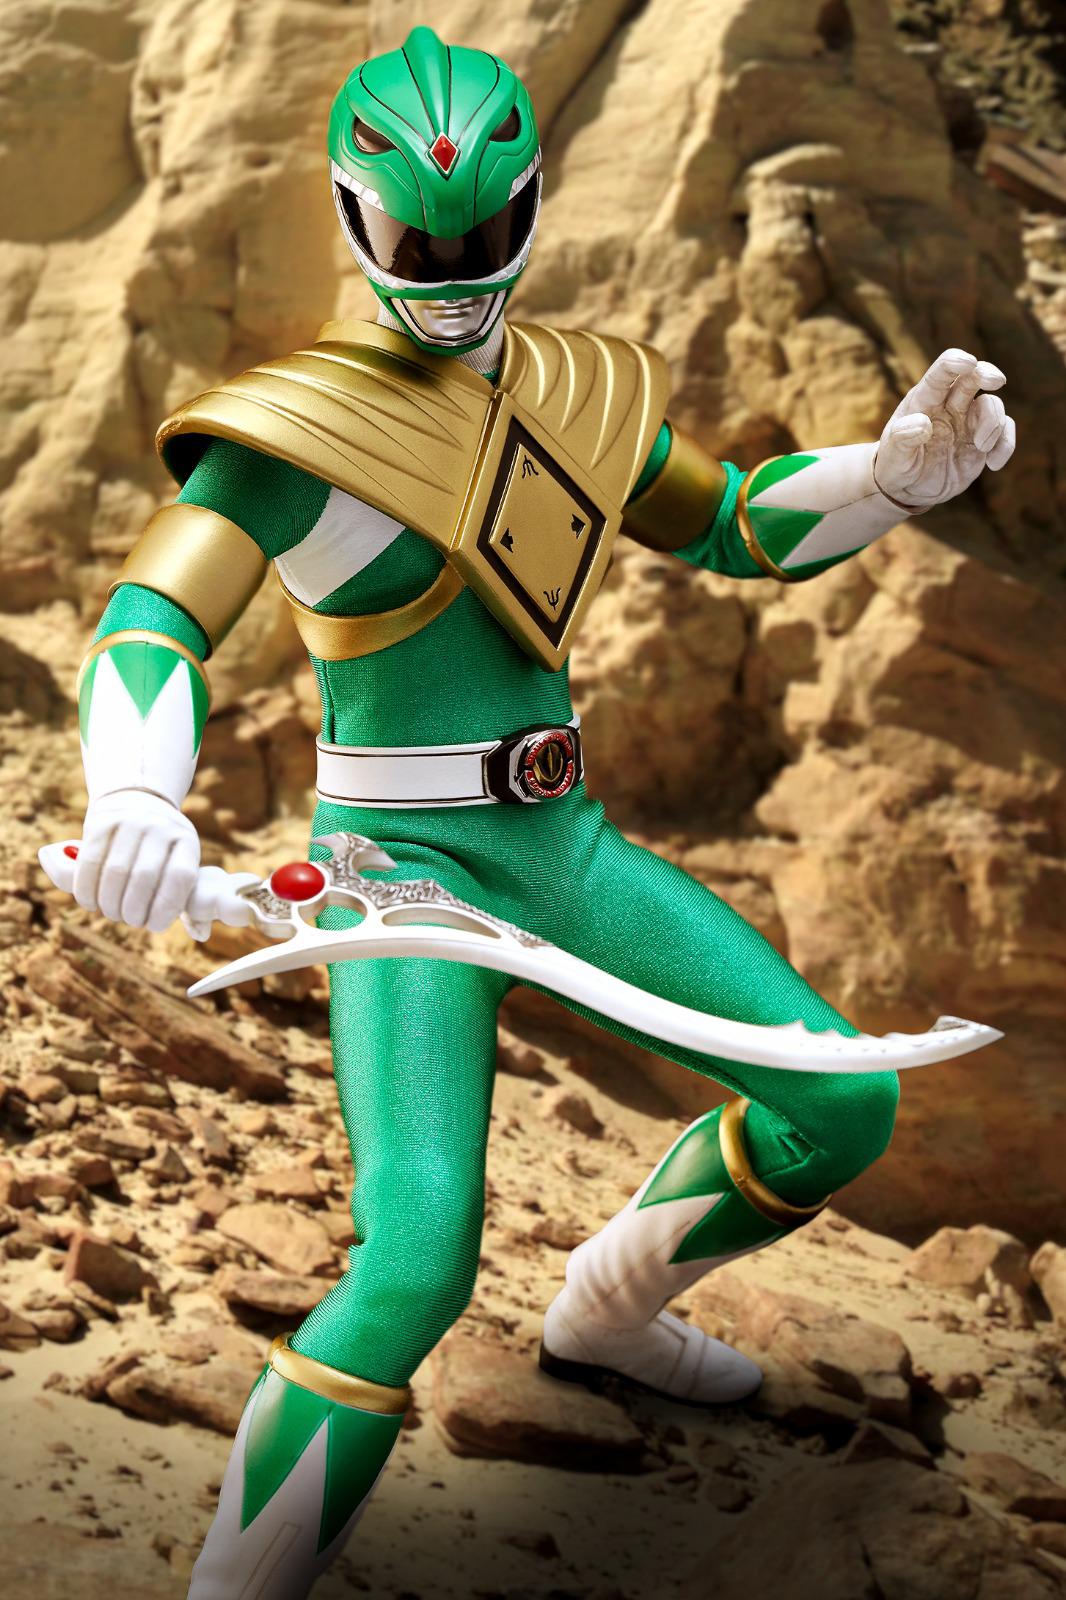 Ace Toyz CMSH-06 Green Hero 1:6 Scale Figure